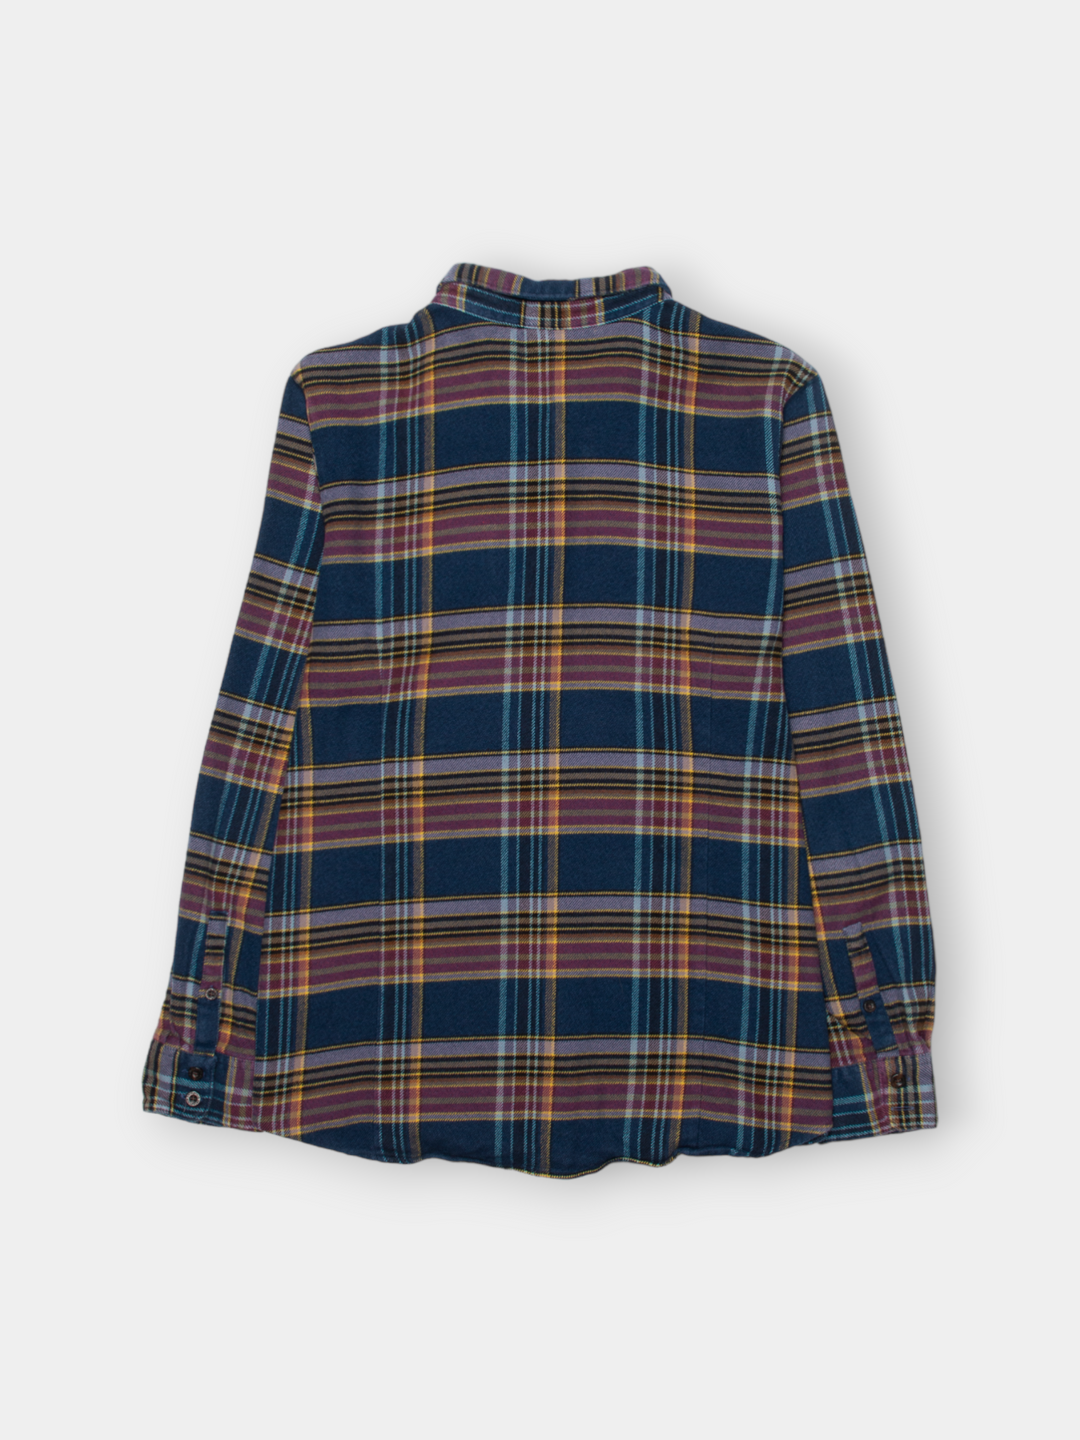 Vintage Patagonia Flannel Shirt (S)